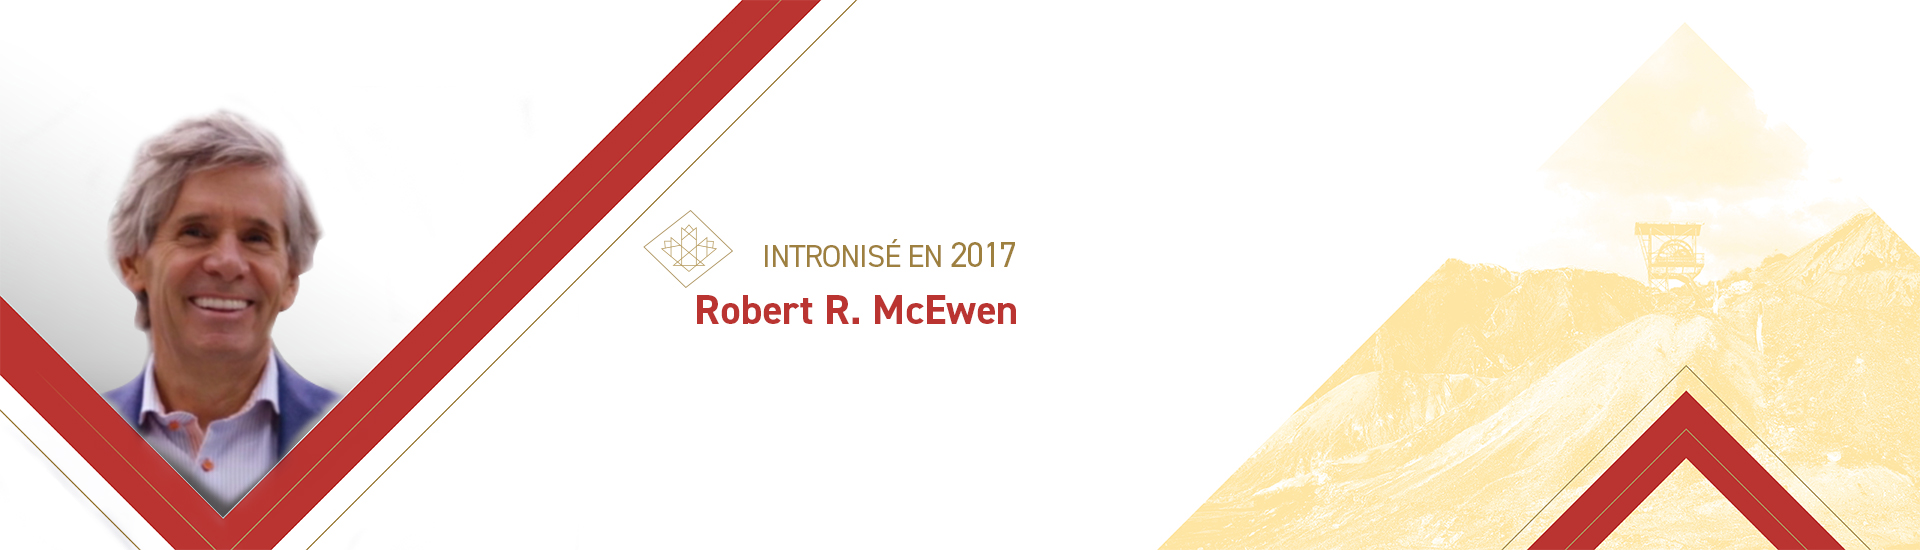 Robert R. McEwen (b. 1950)